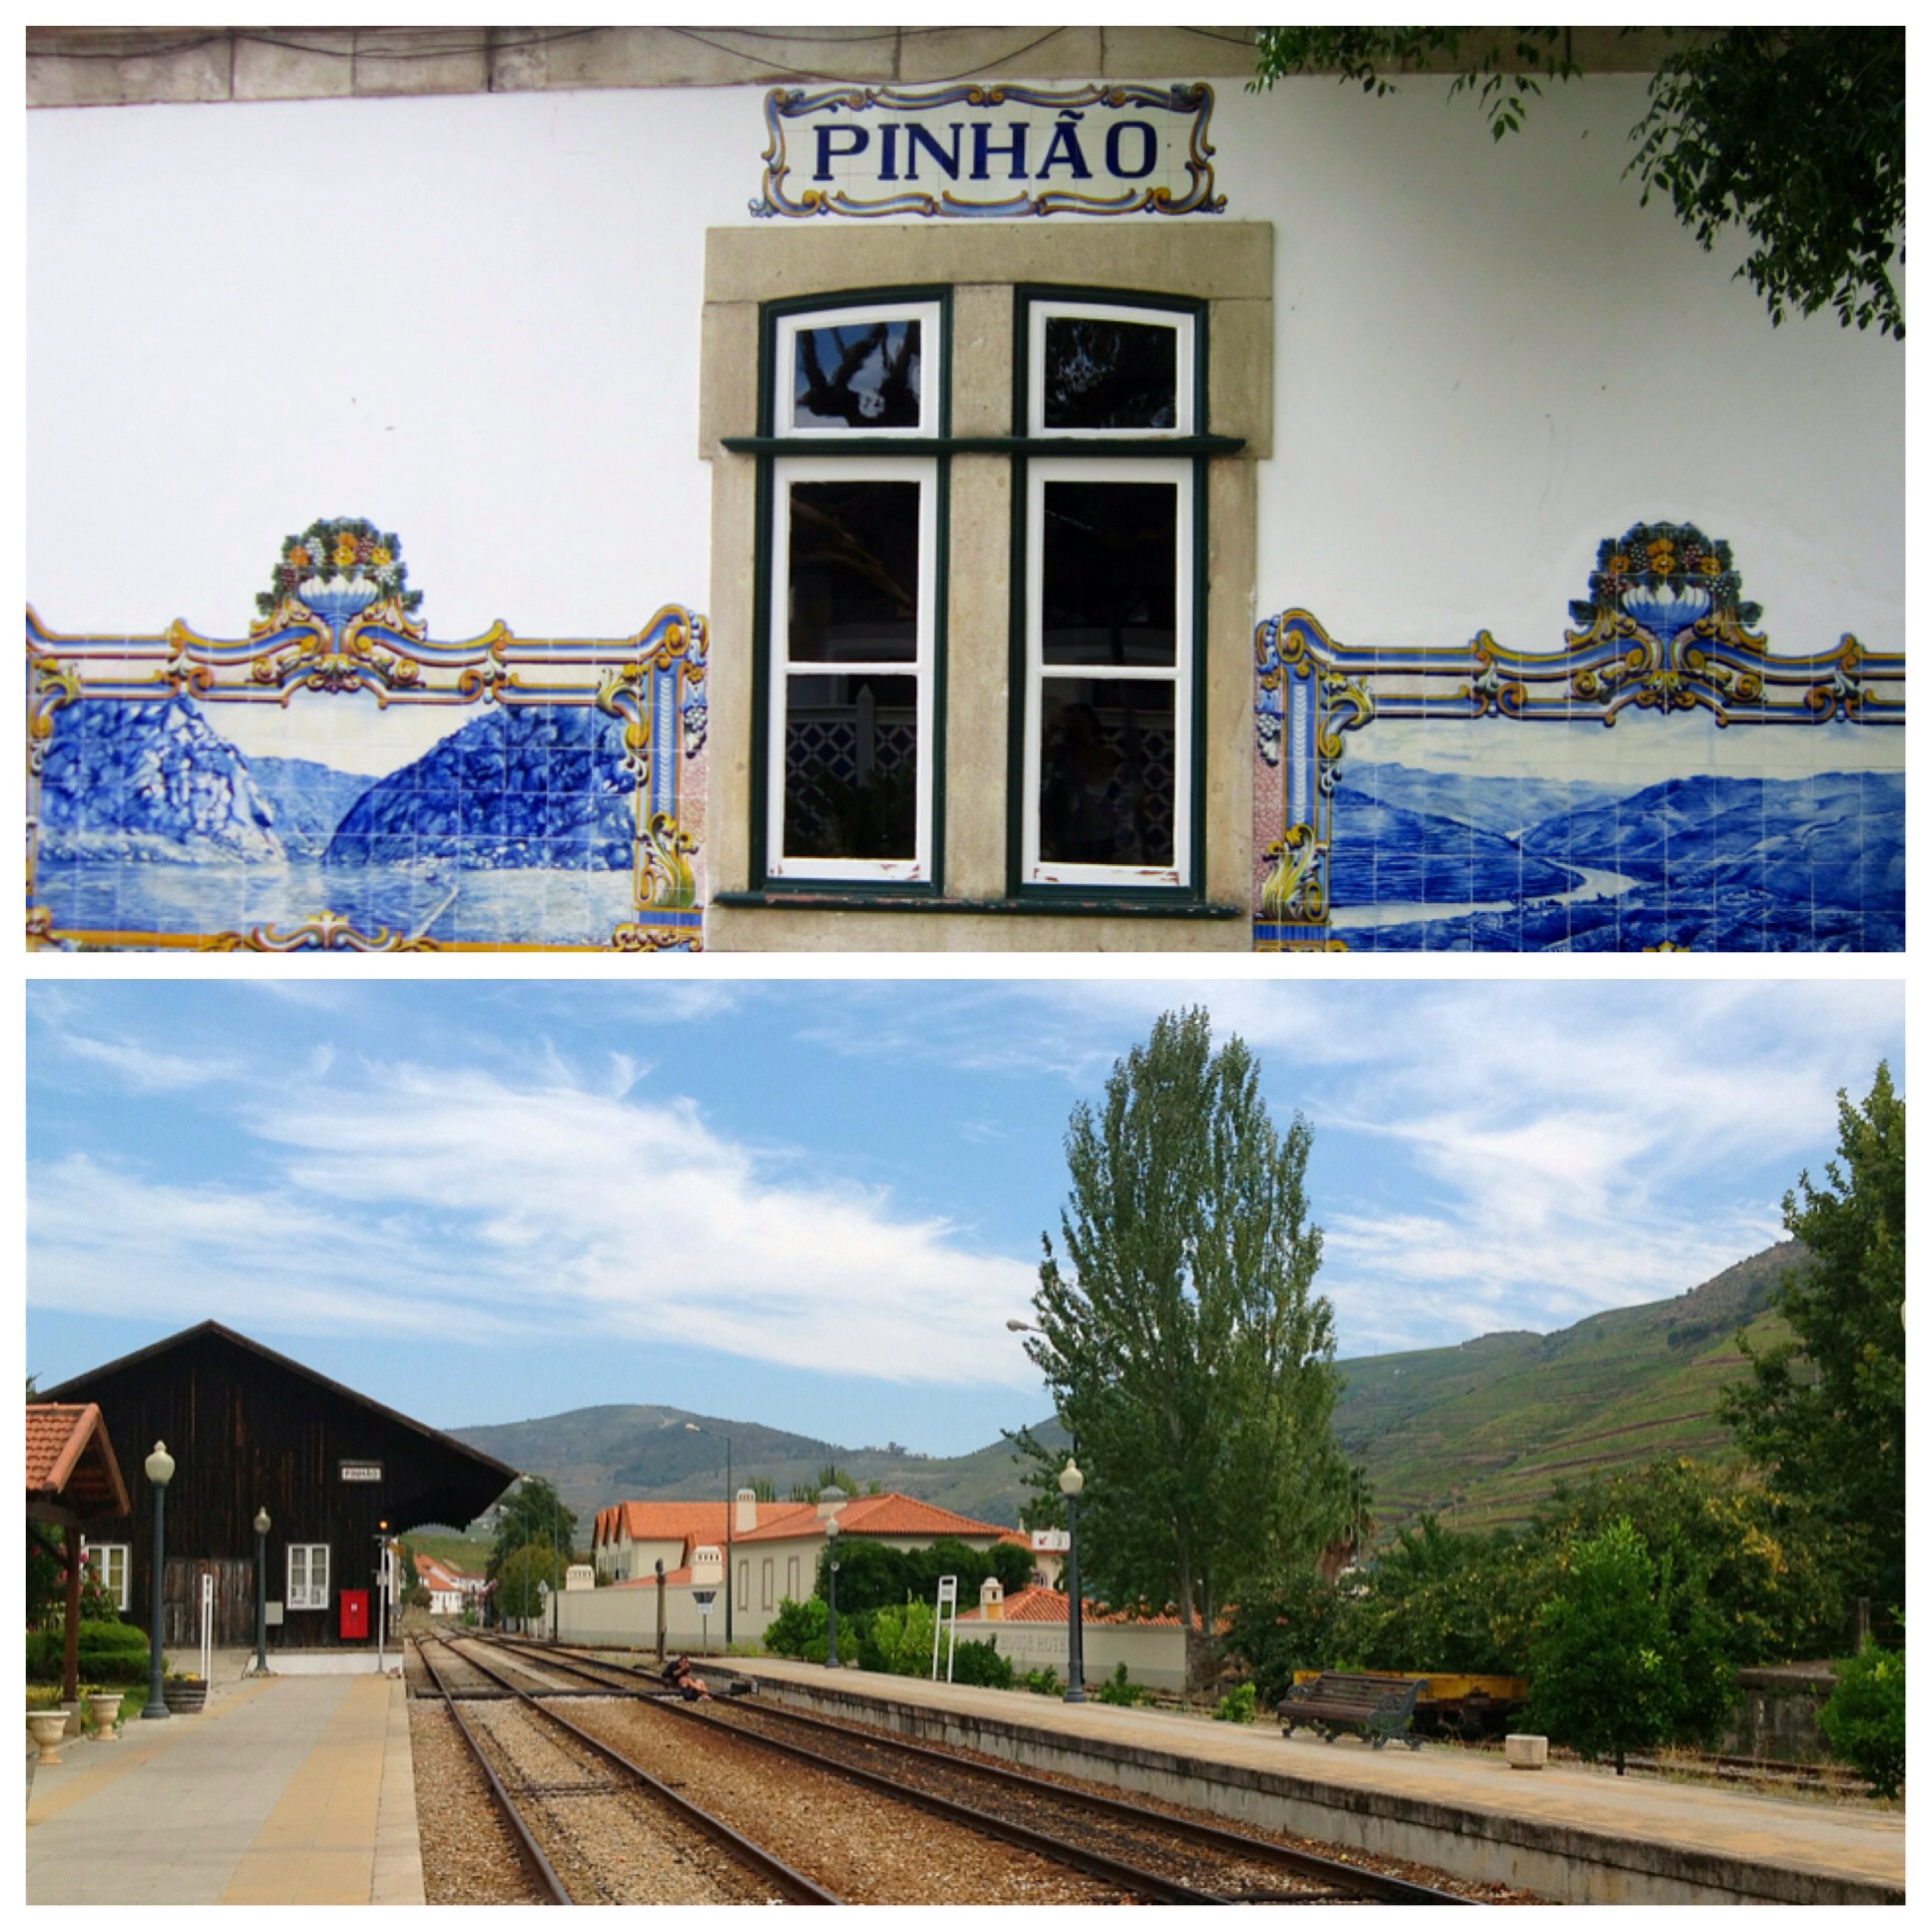 Pinhao train station mosaic tiles Portugal